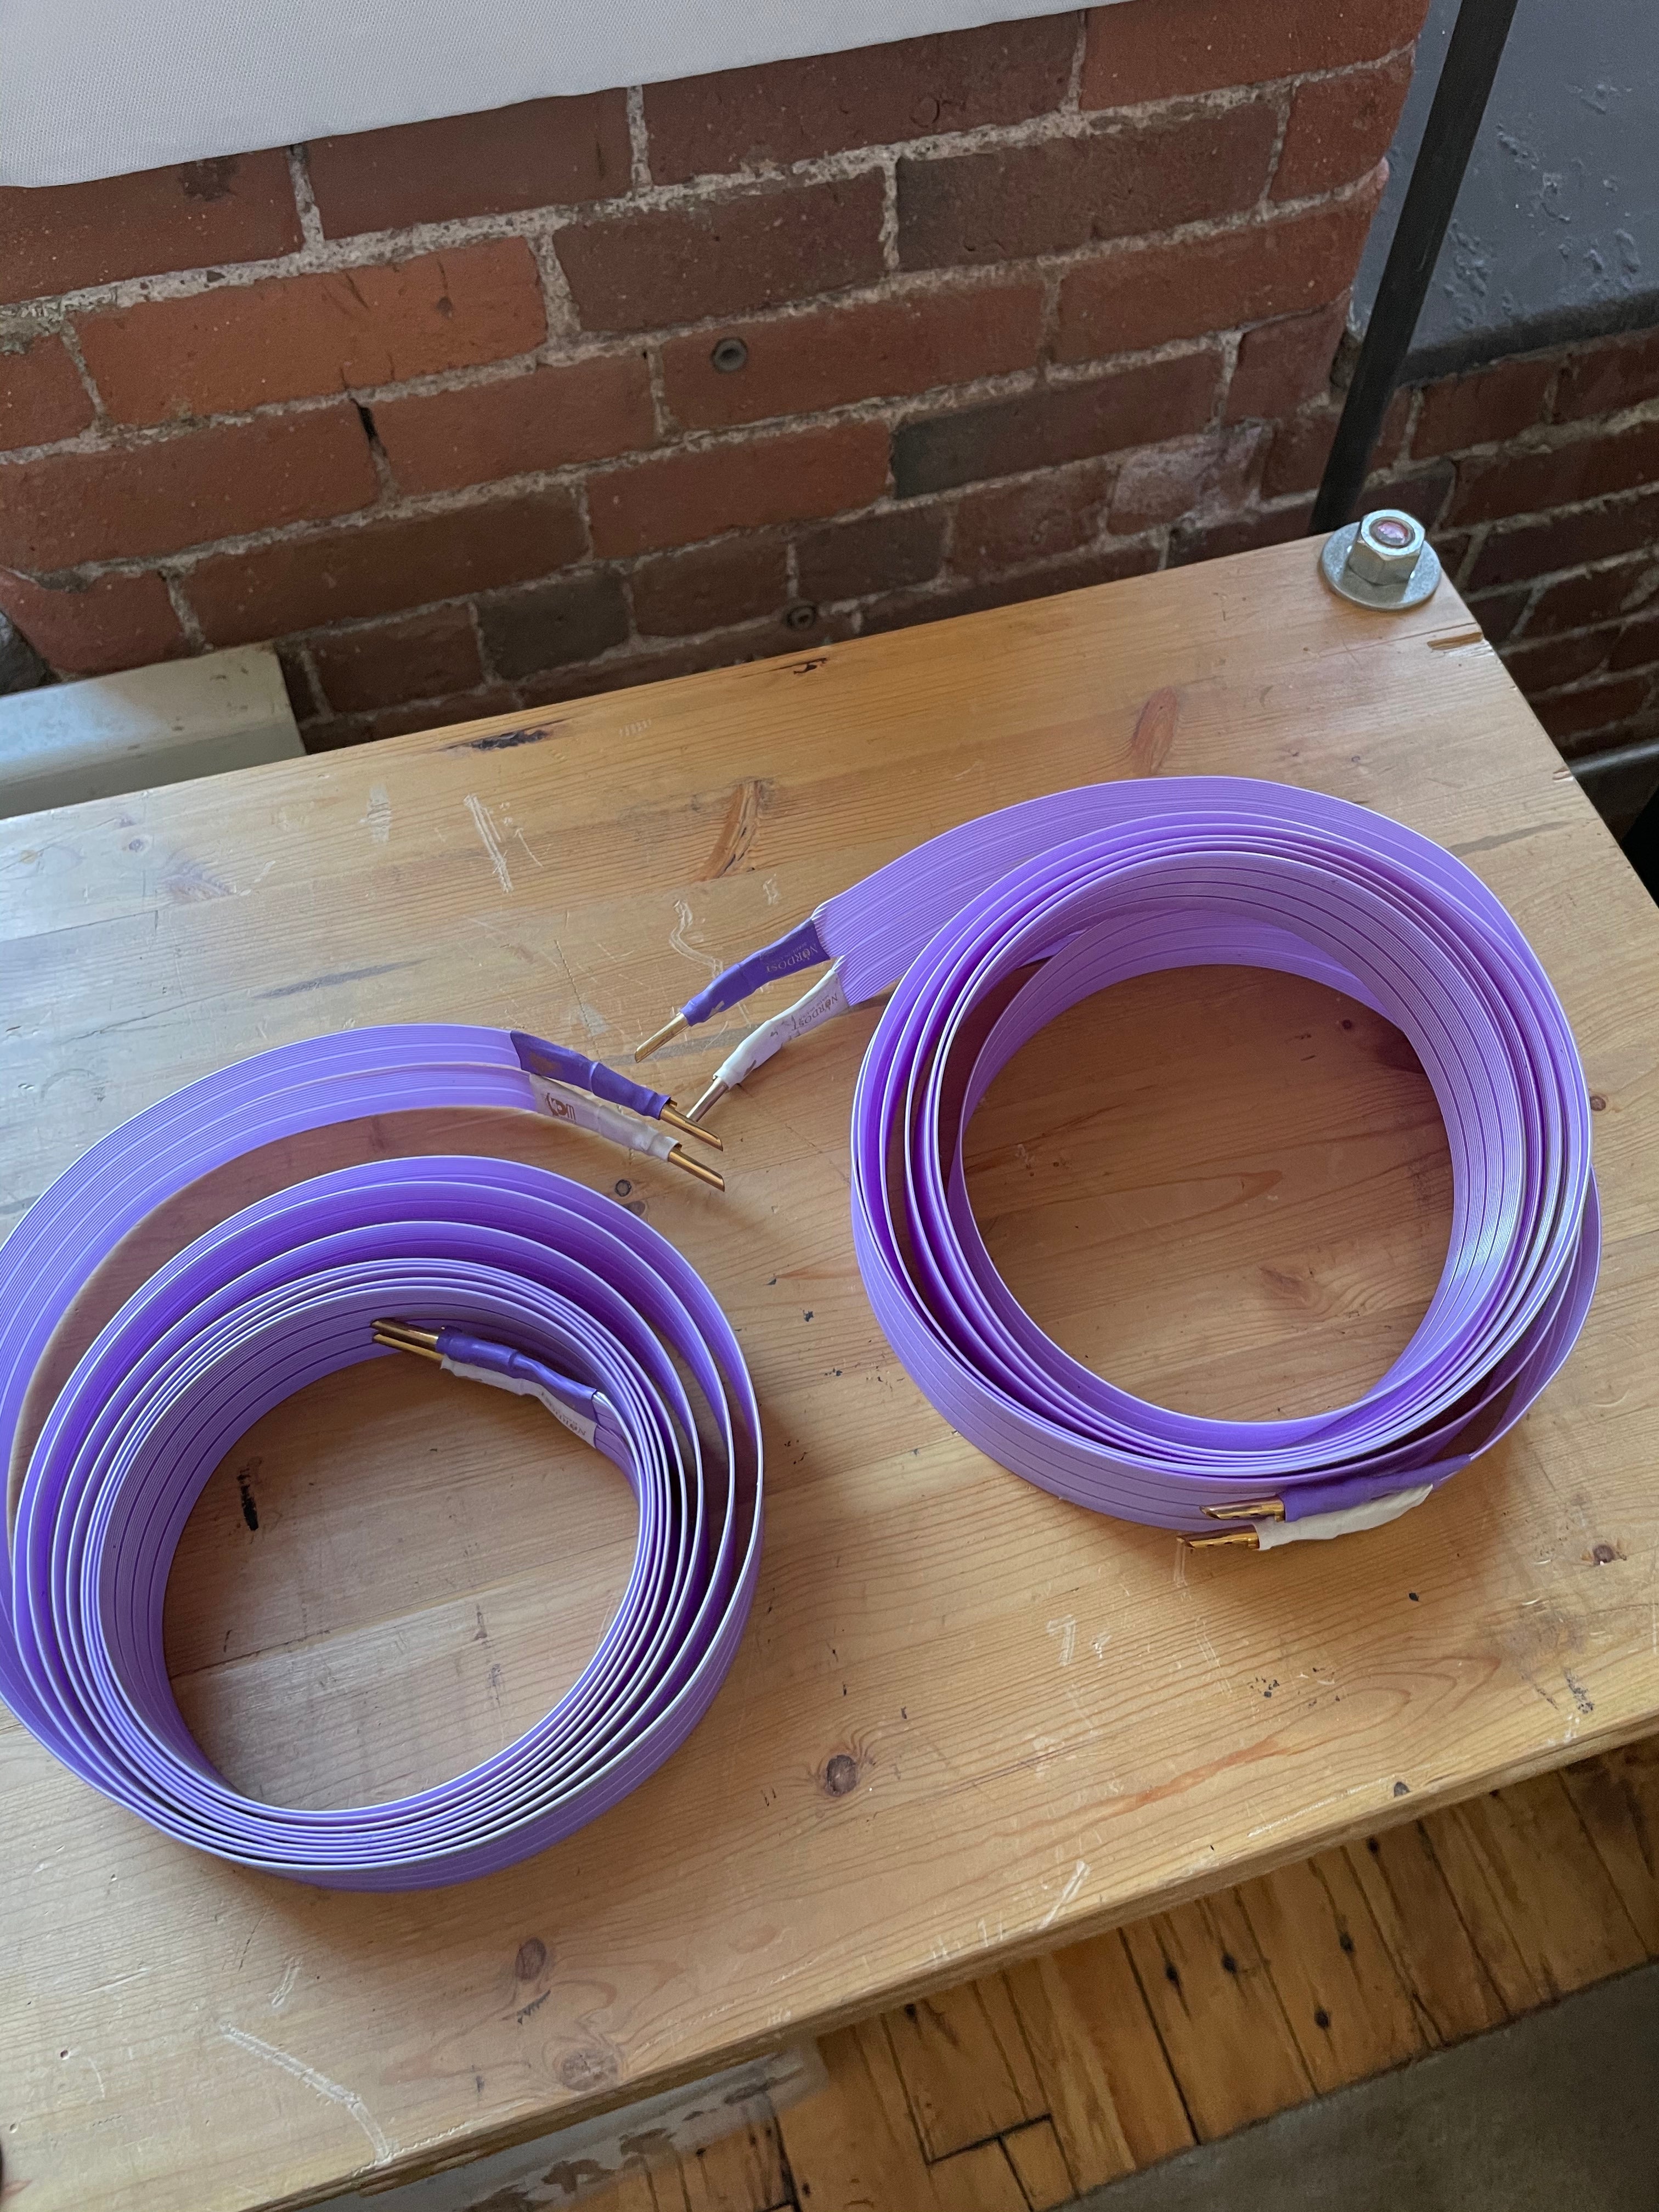 Nordost SPM Reference "Flatline" Speaker Cable, 14'3" Length Pair - SOLD